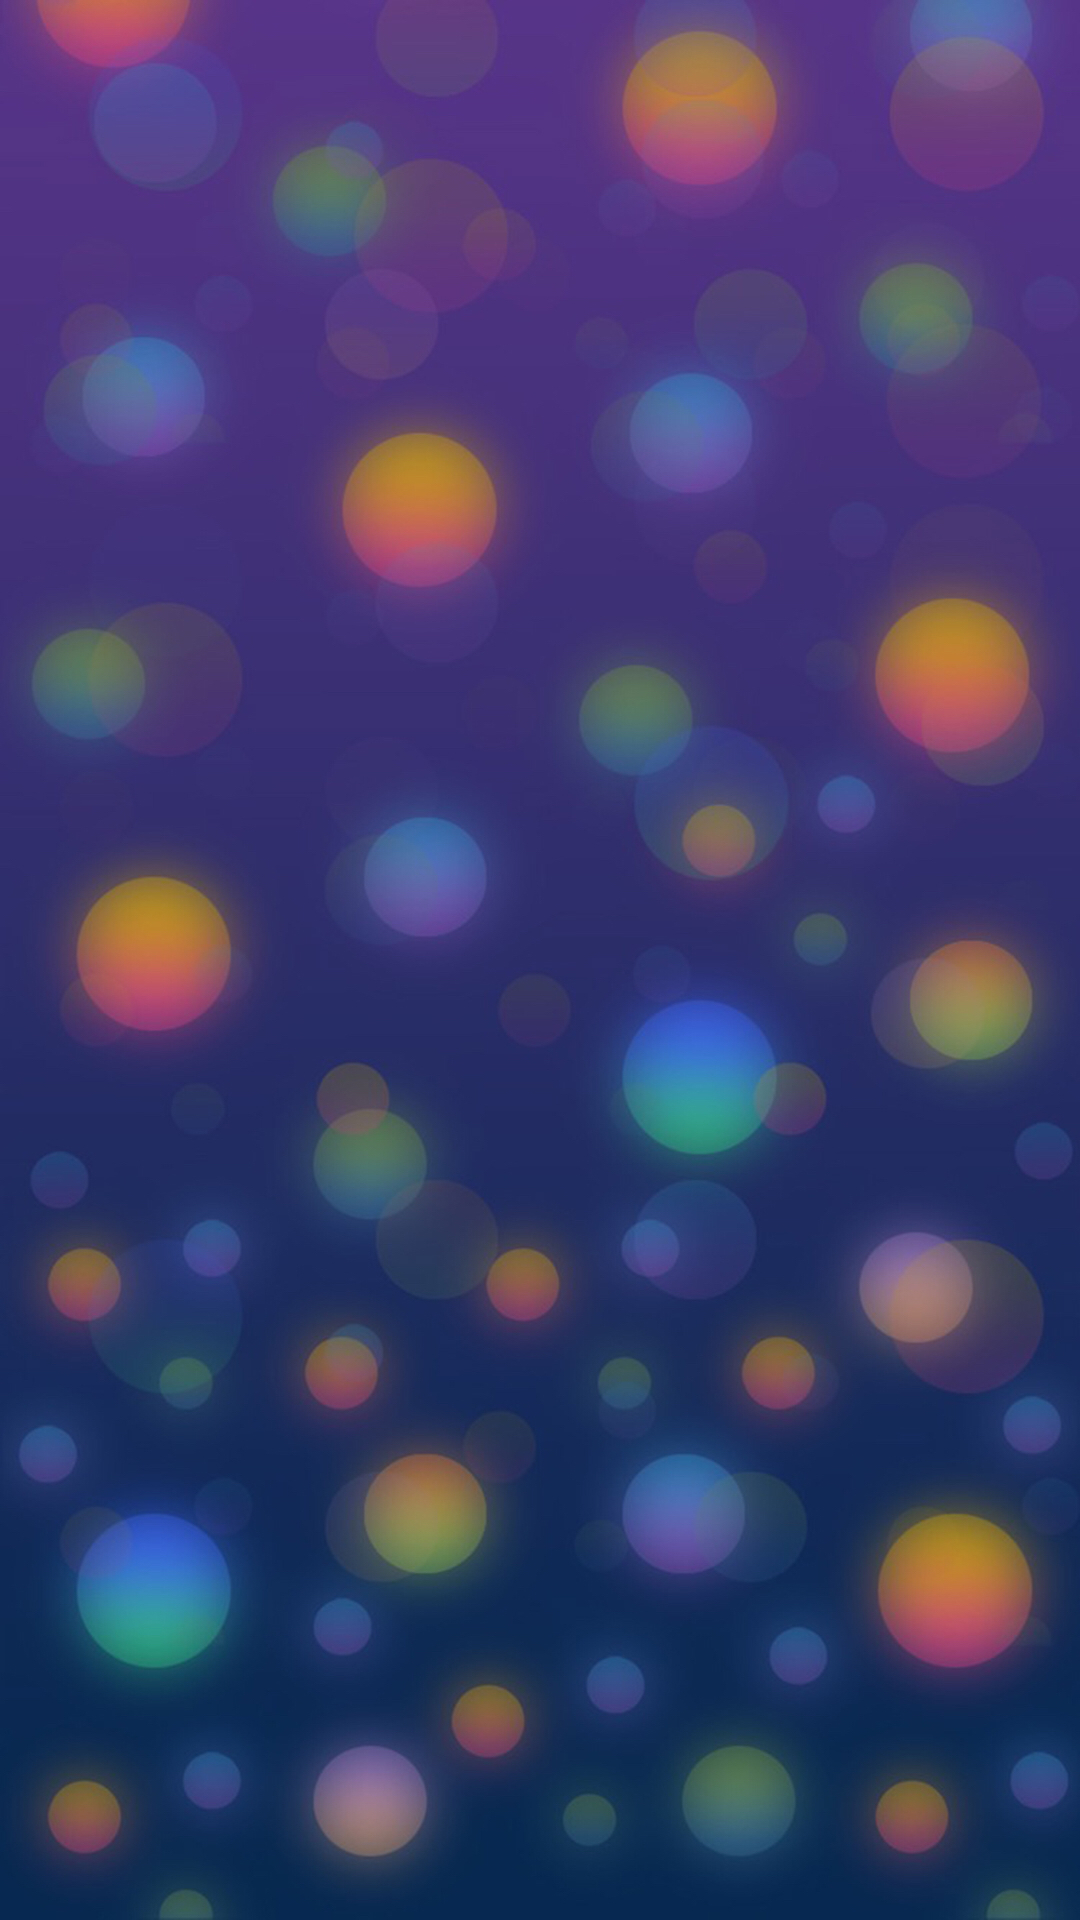 iphone7plus wallpaper,blau,violett,lila,licht,muster